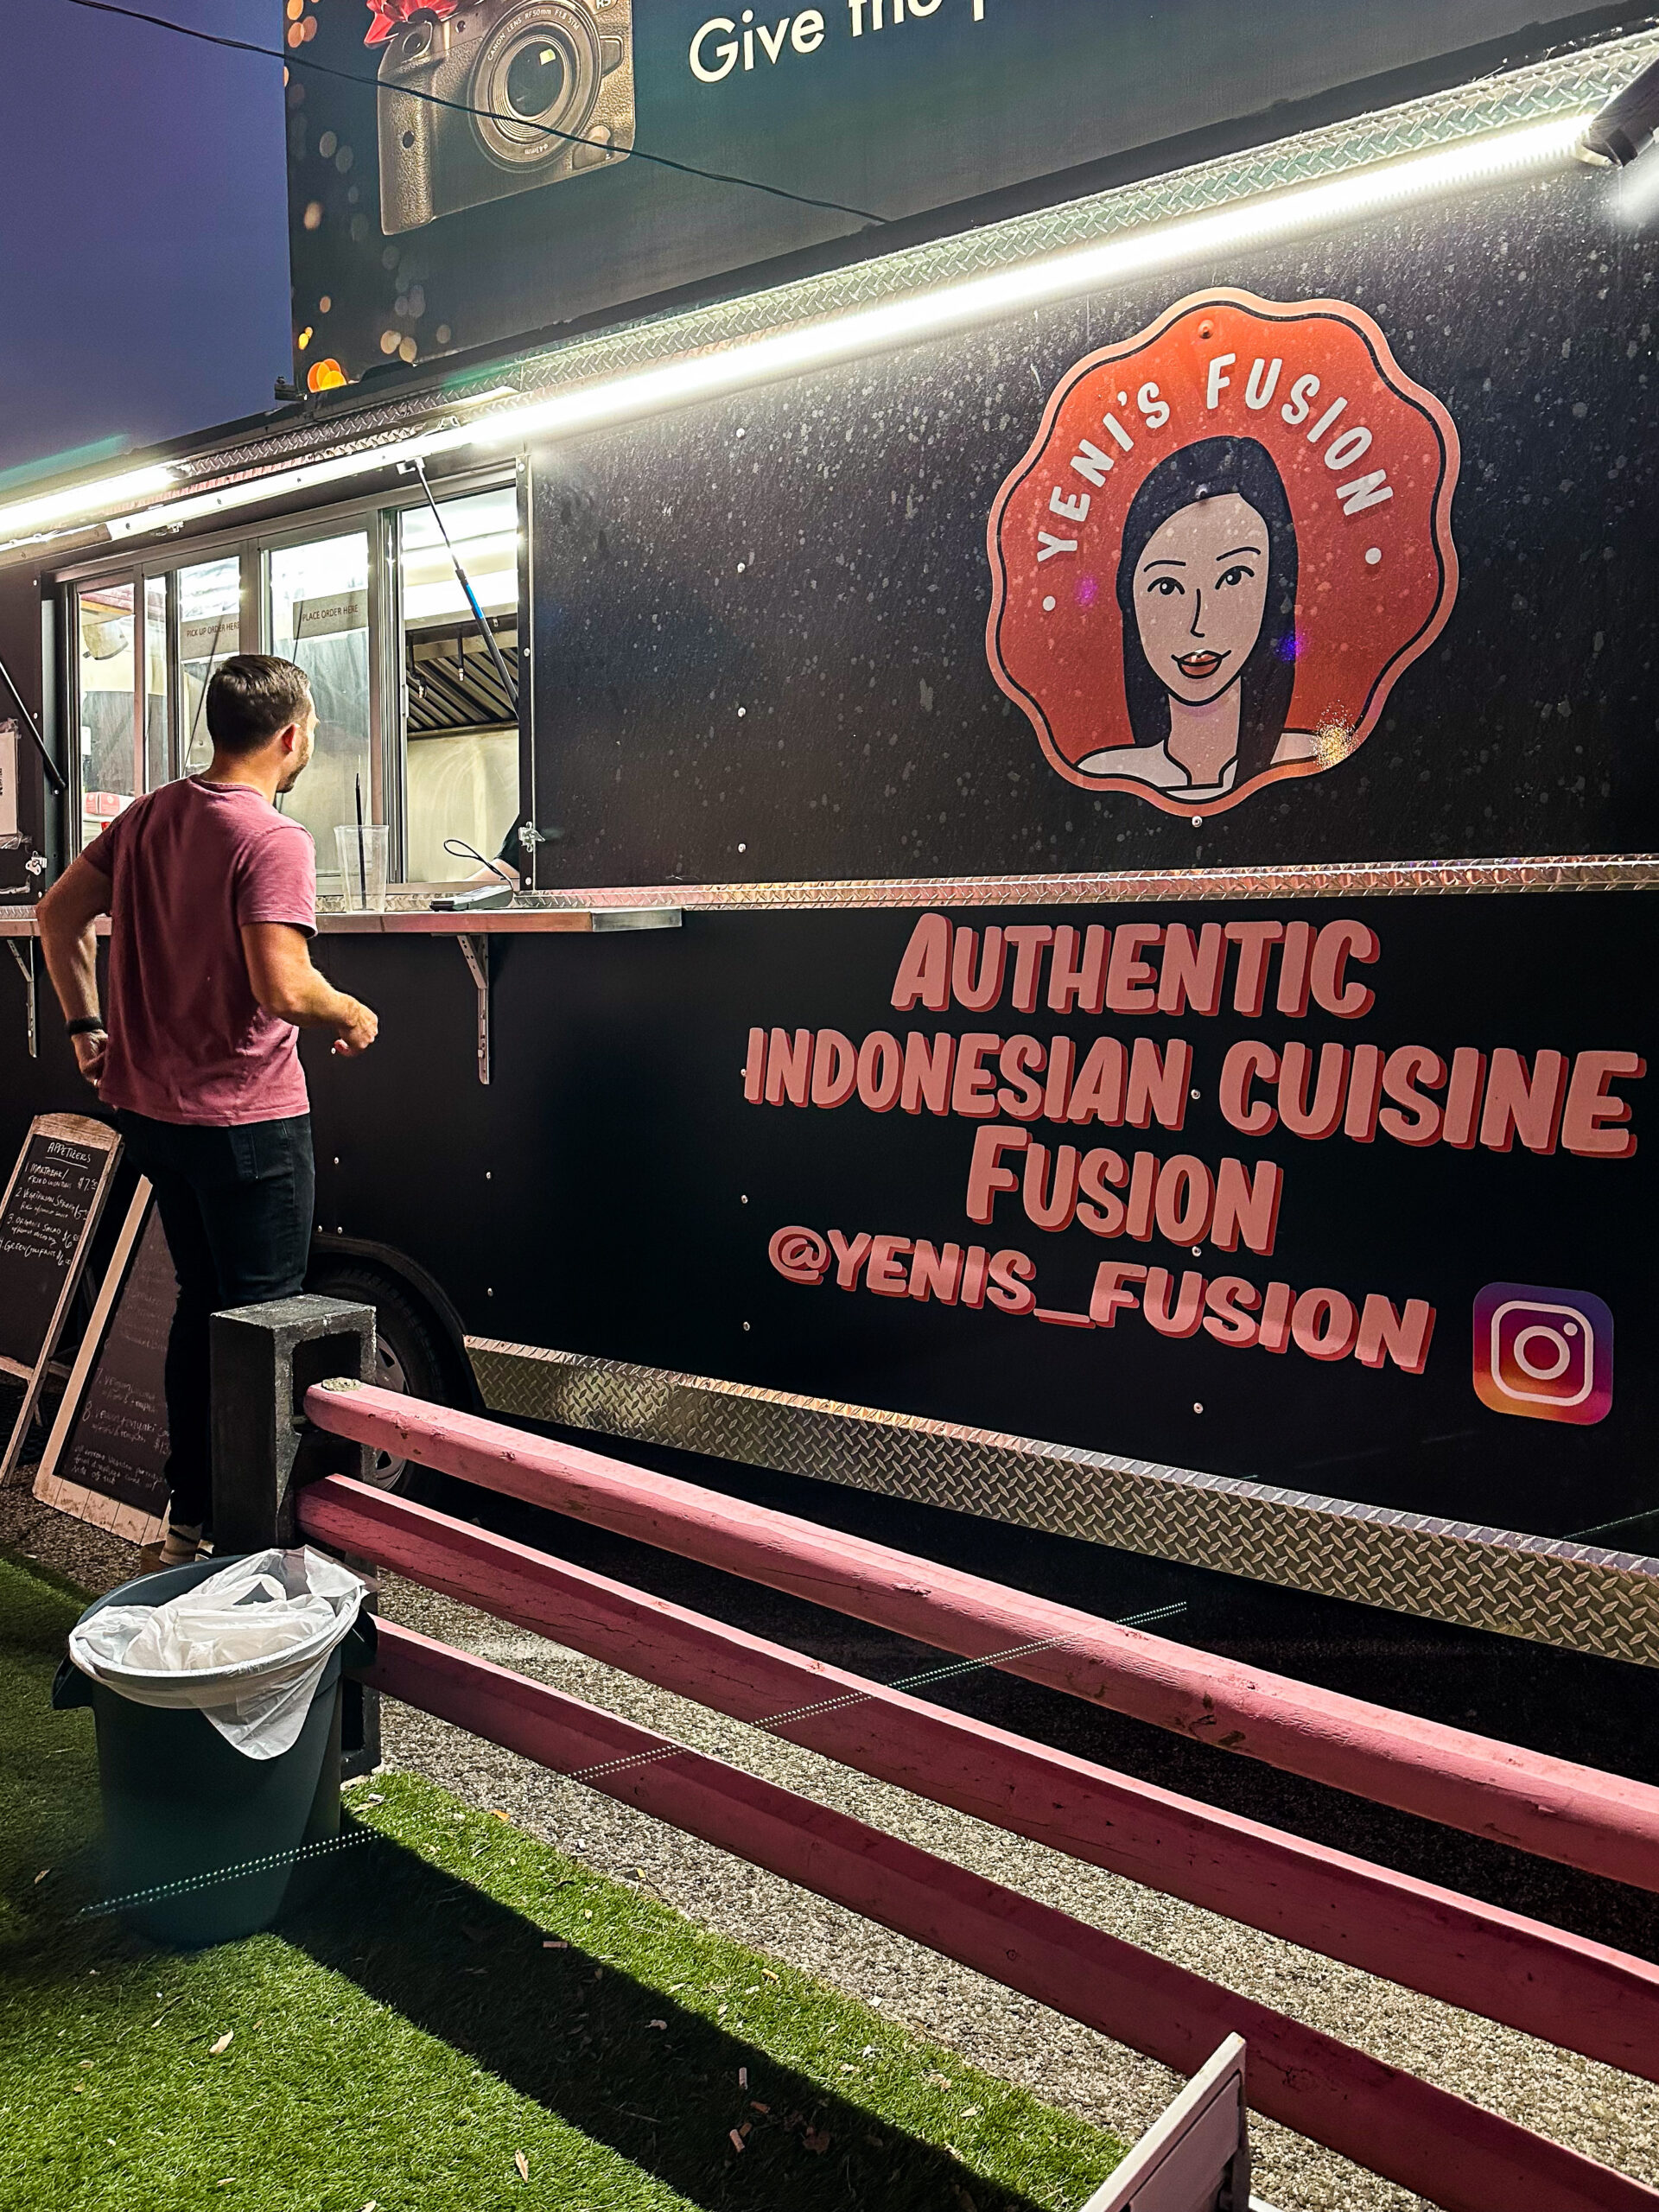 Yeni's food truck in Austin